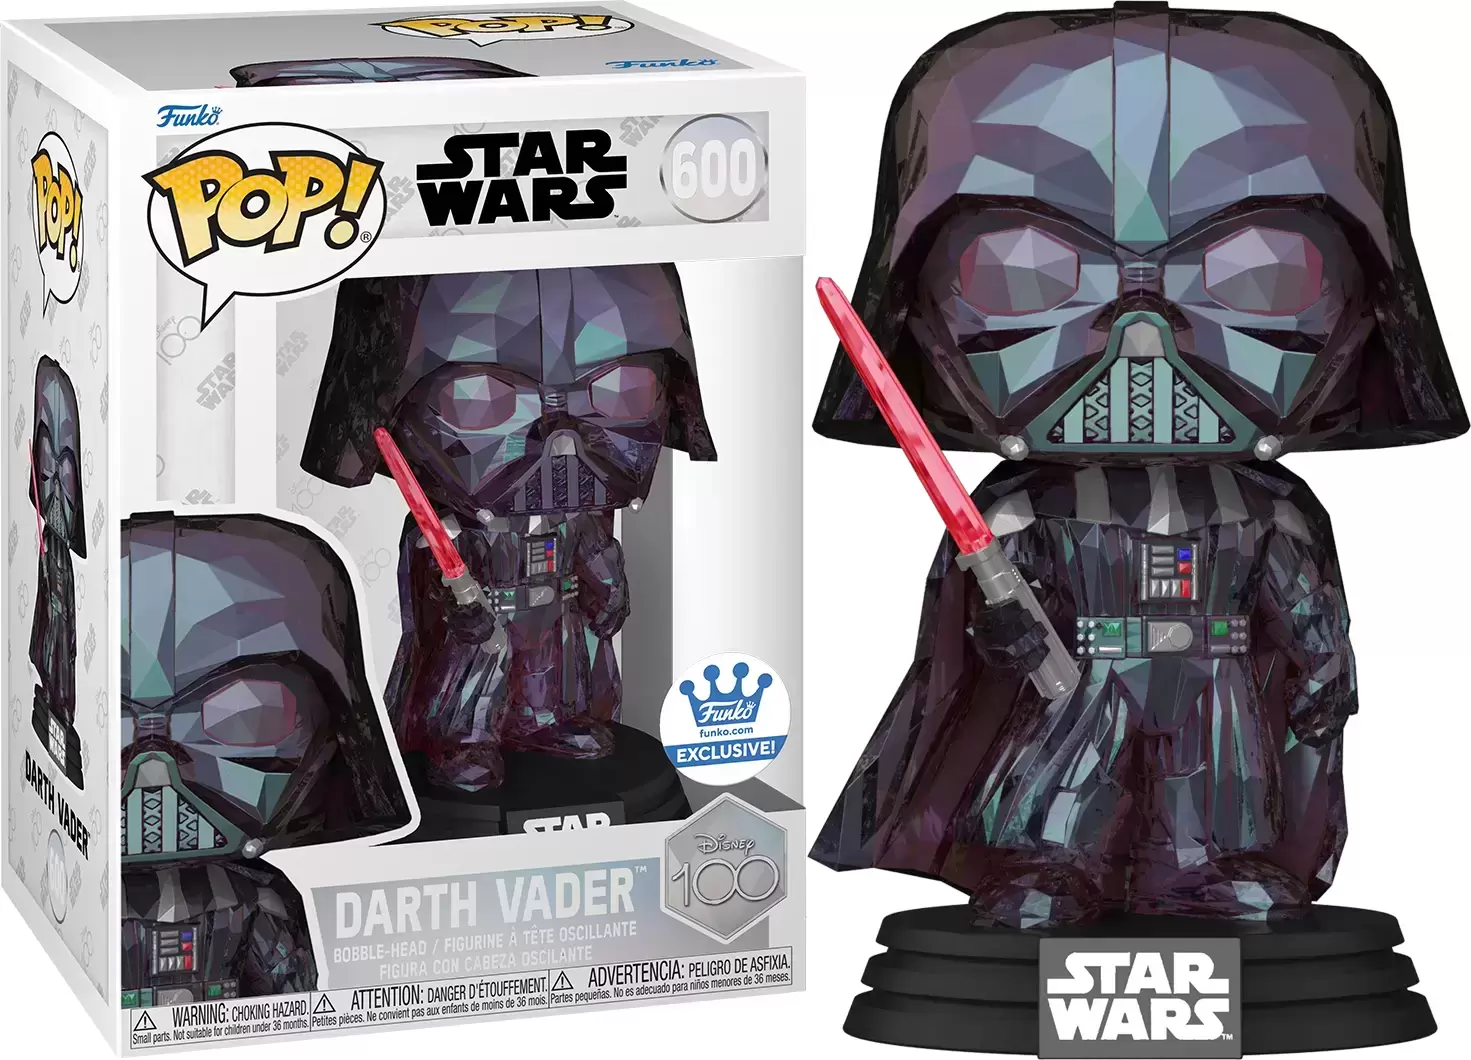 Cabecear alcohol exterior Star Wars - Darth Vader Facets - POP! Star Wars action figure 600